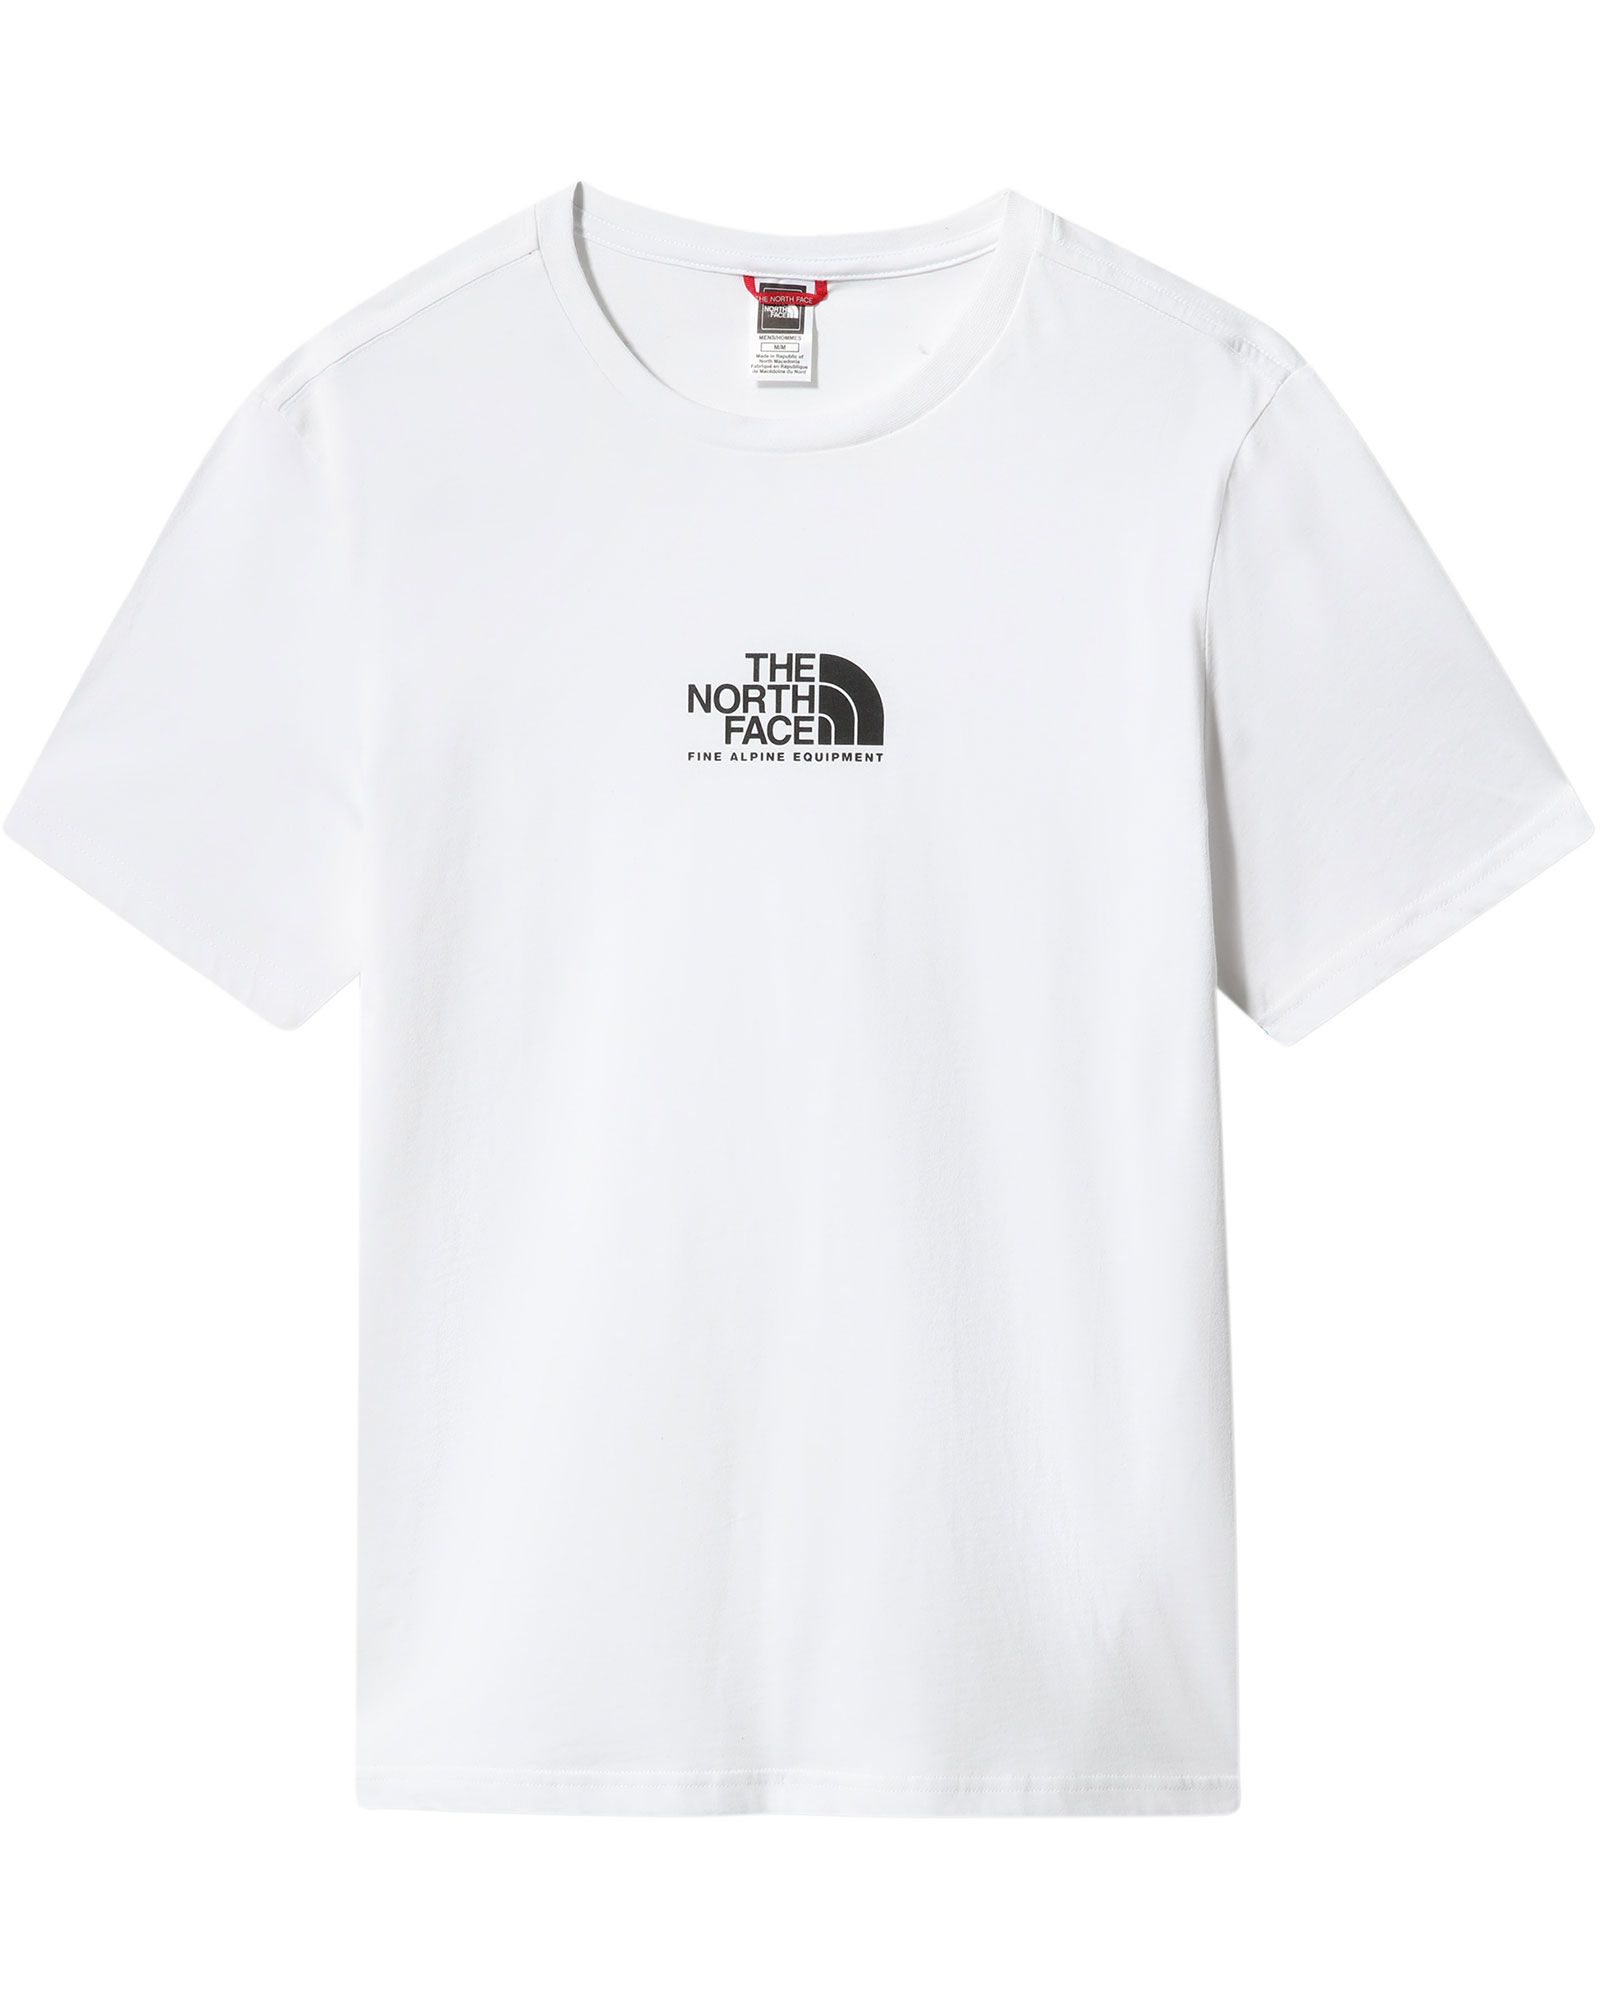 The North Face Fine Alpine Equipment 3 Men’s T Shirt - TNF White/TNF Black XXL